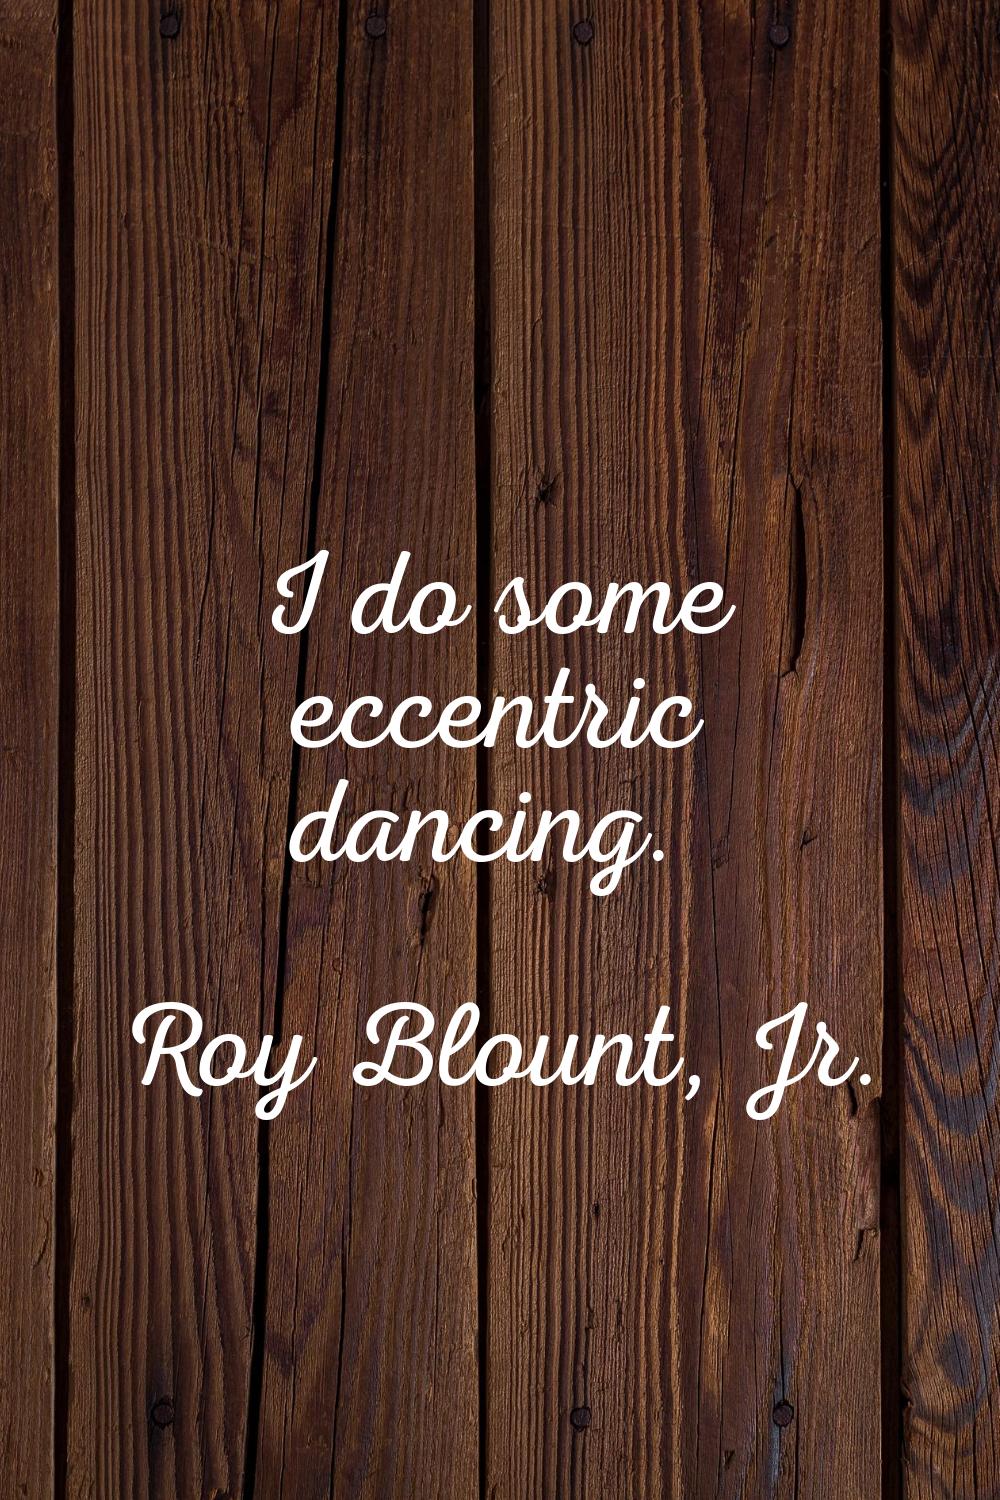 I do some eccentric dancing.